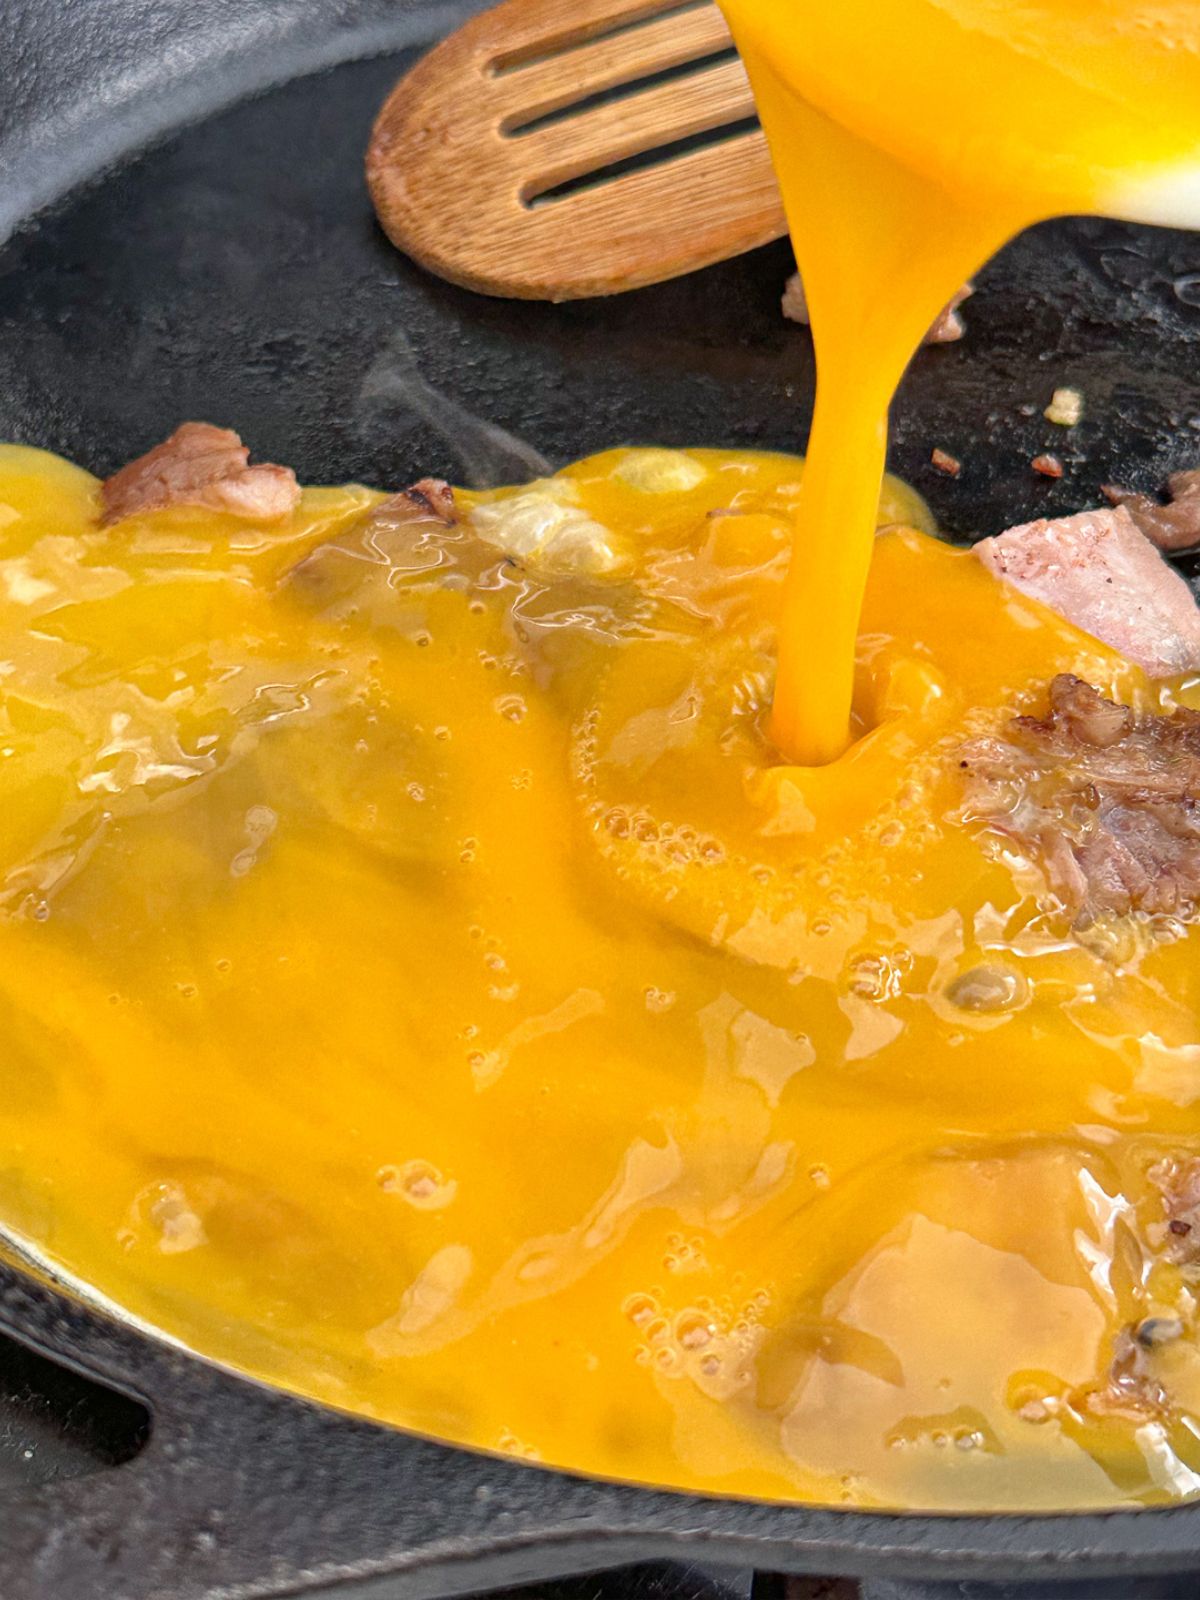 Adding beaten eggs to a pan with pork.